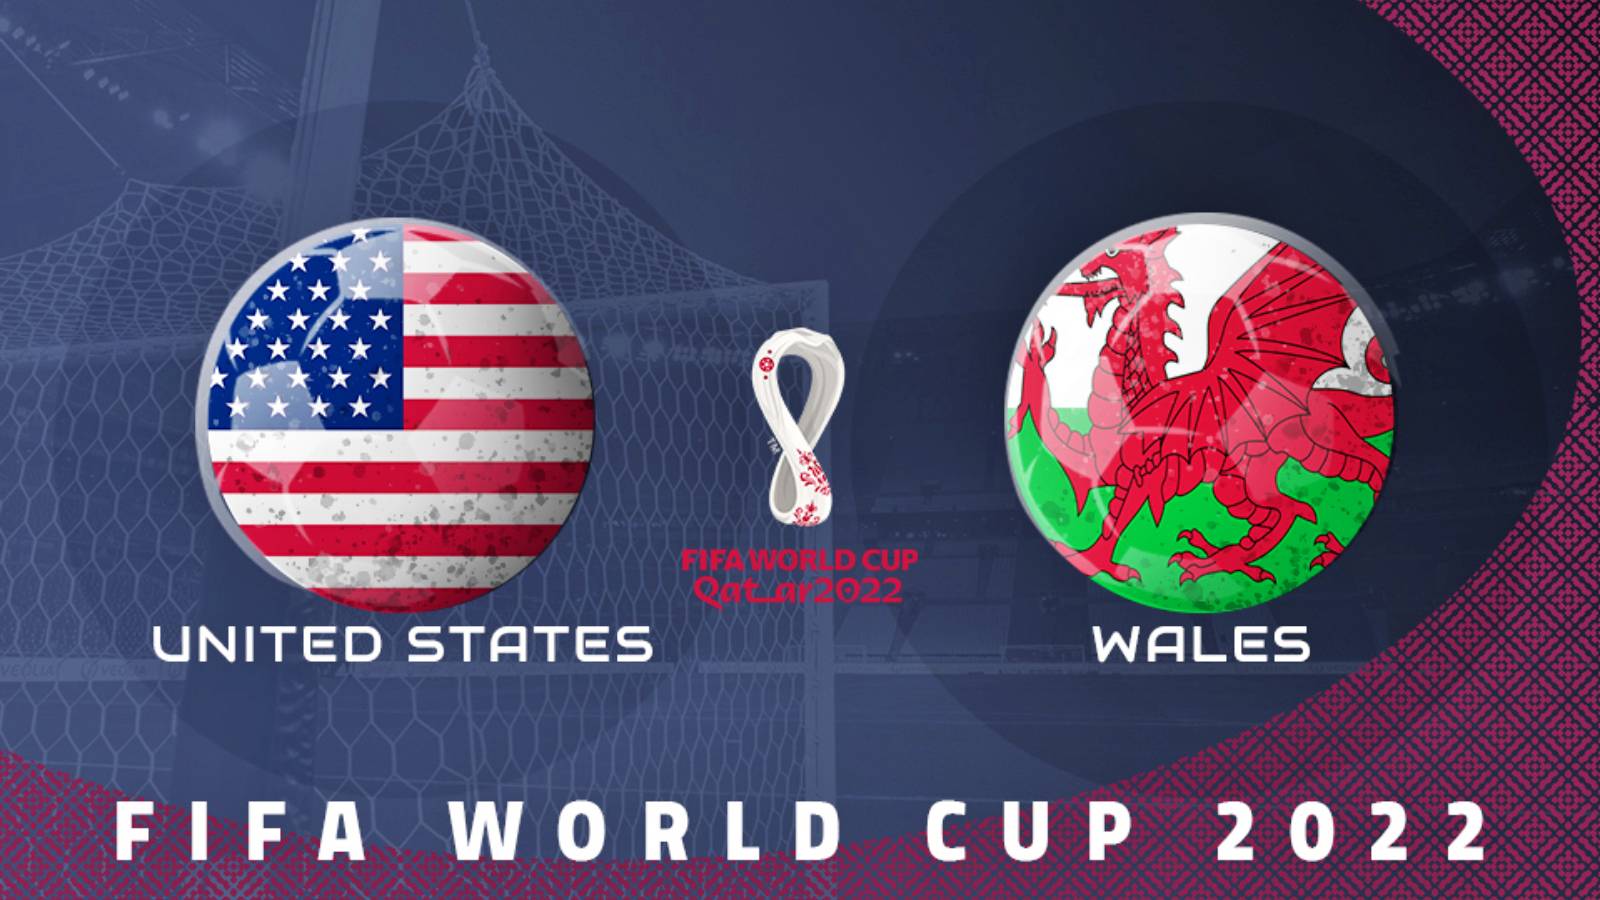 USA – WALES LIVE TVR 1 FOOTBALL WORLD CHAMPIONSHIP 2022